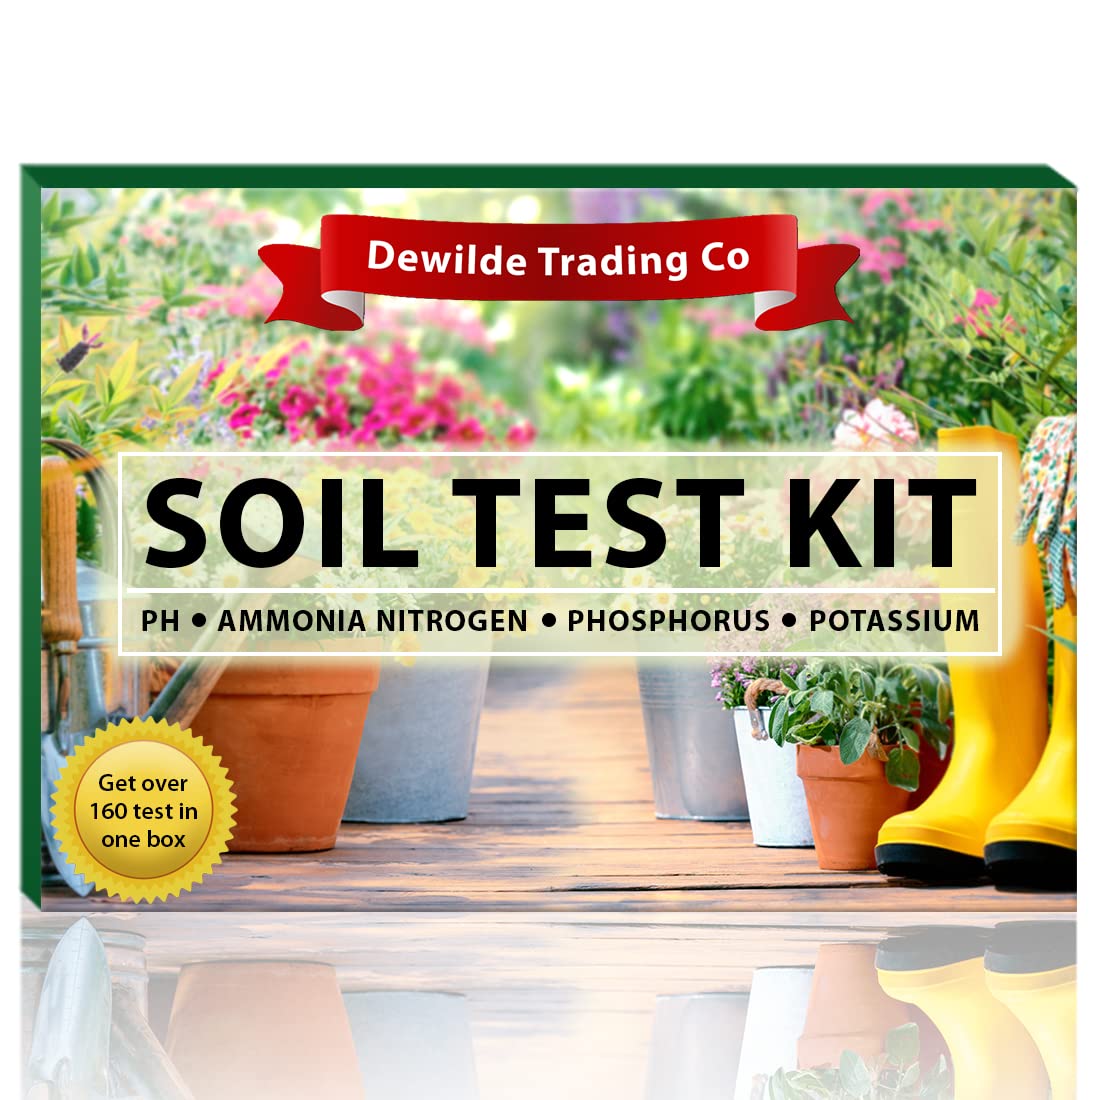 Dewilde Trading Co Soil Test Kit